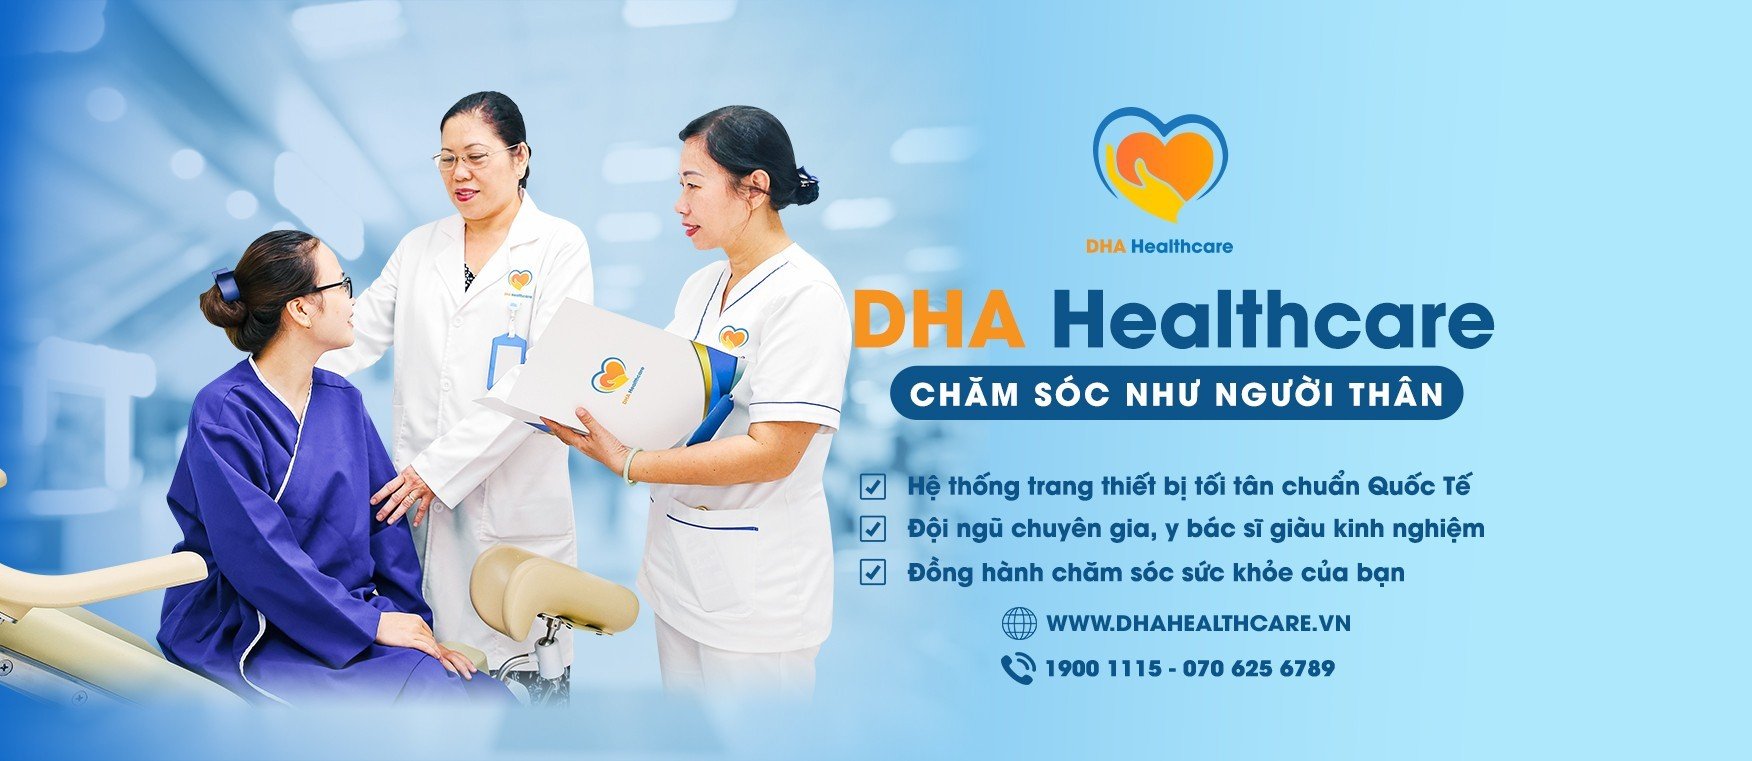 DHA Healthcare ảnh 1